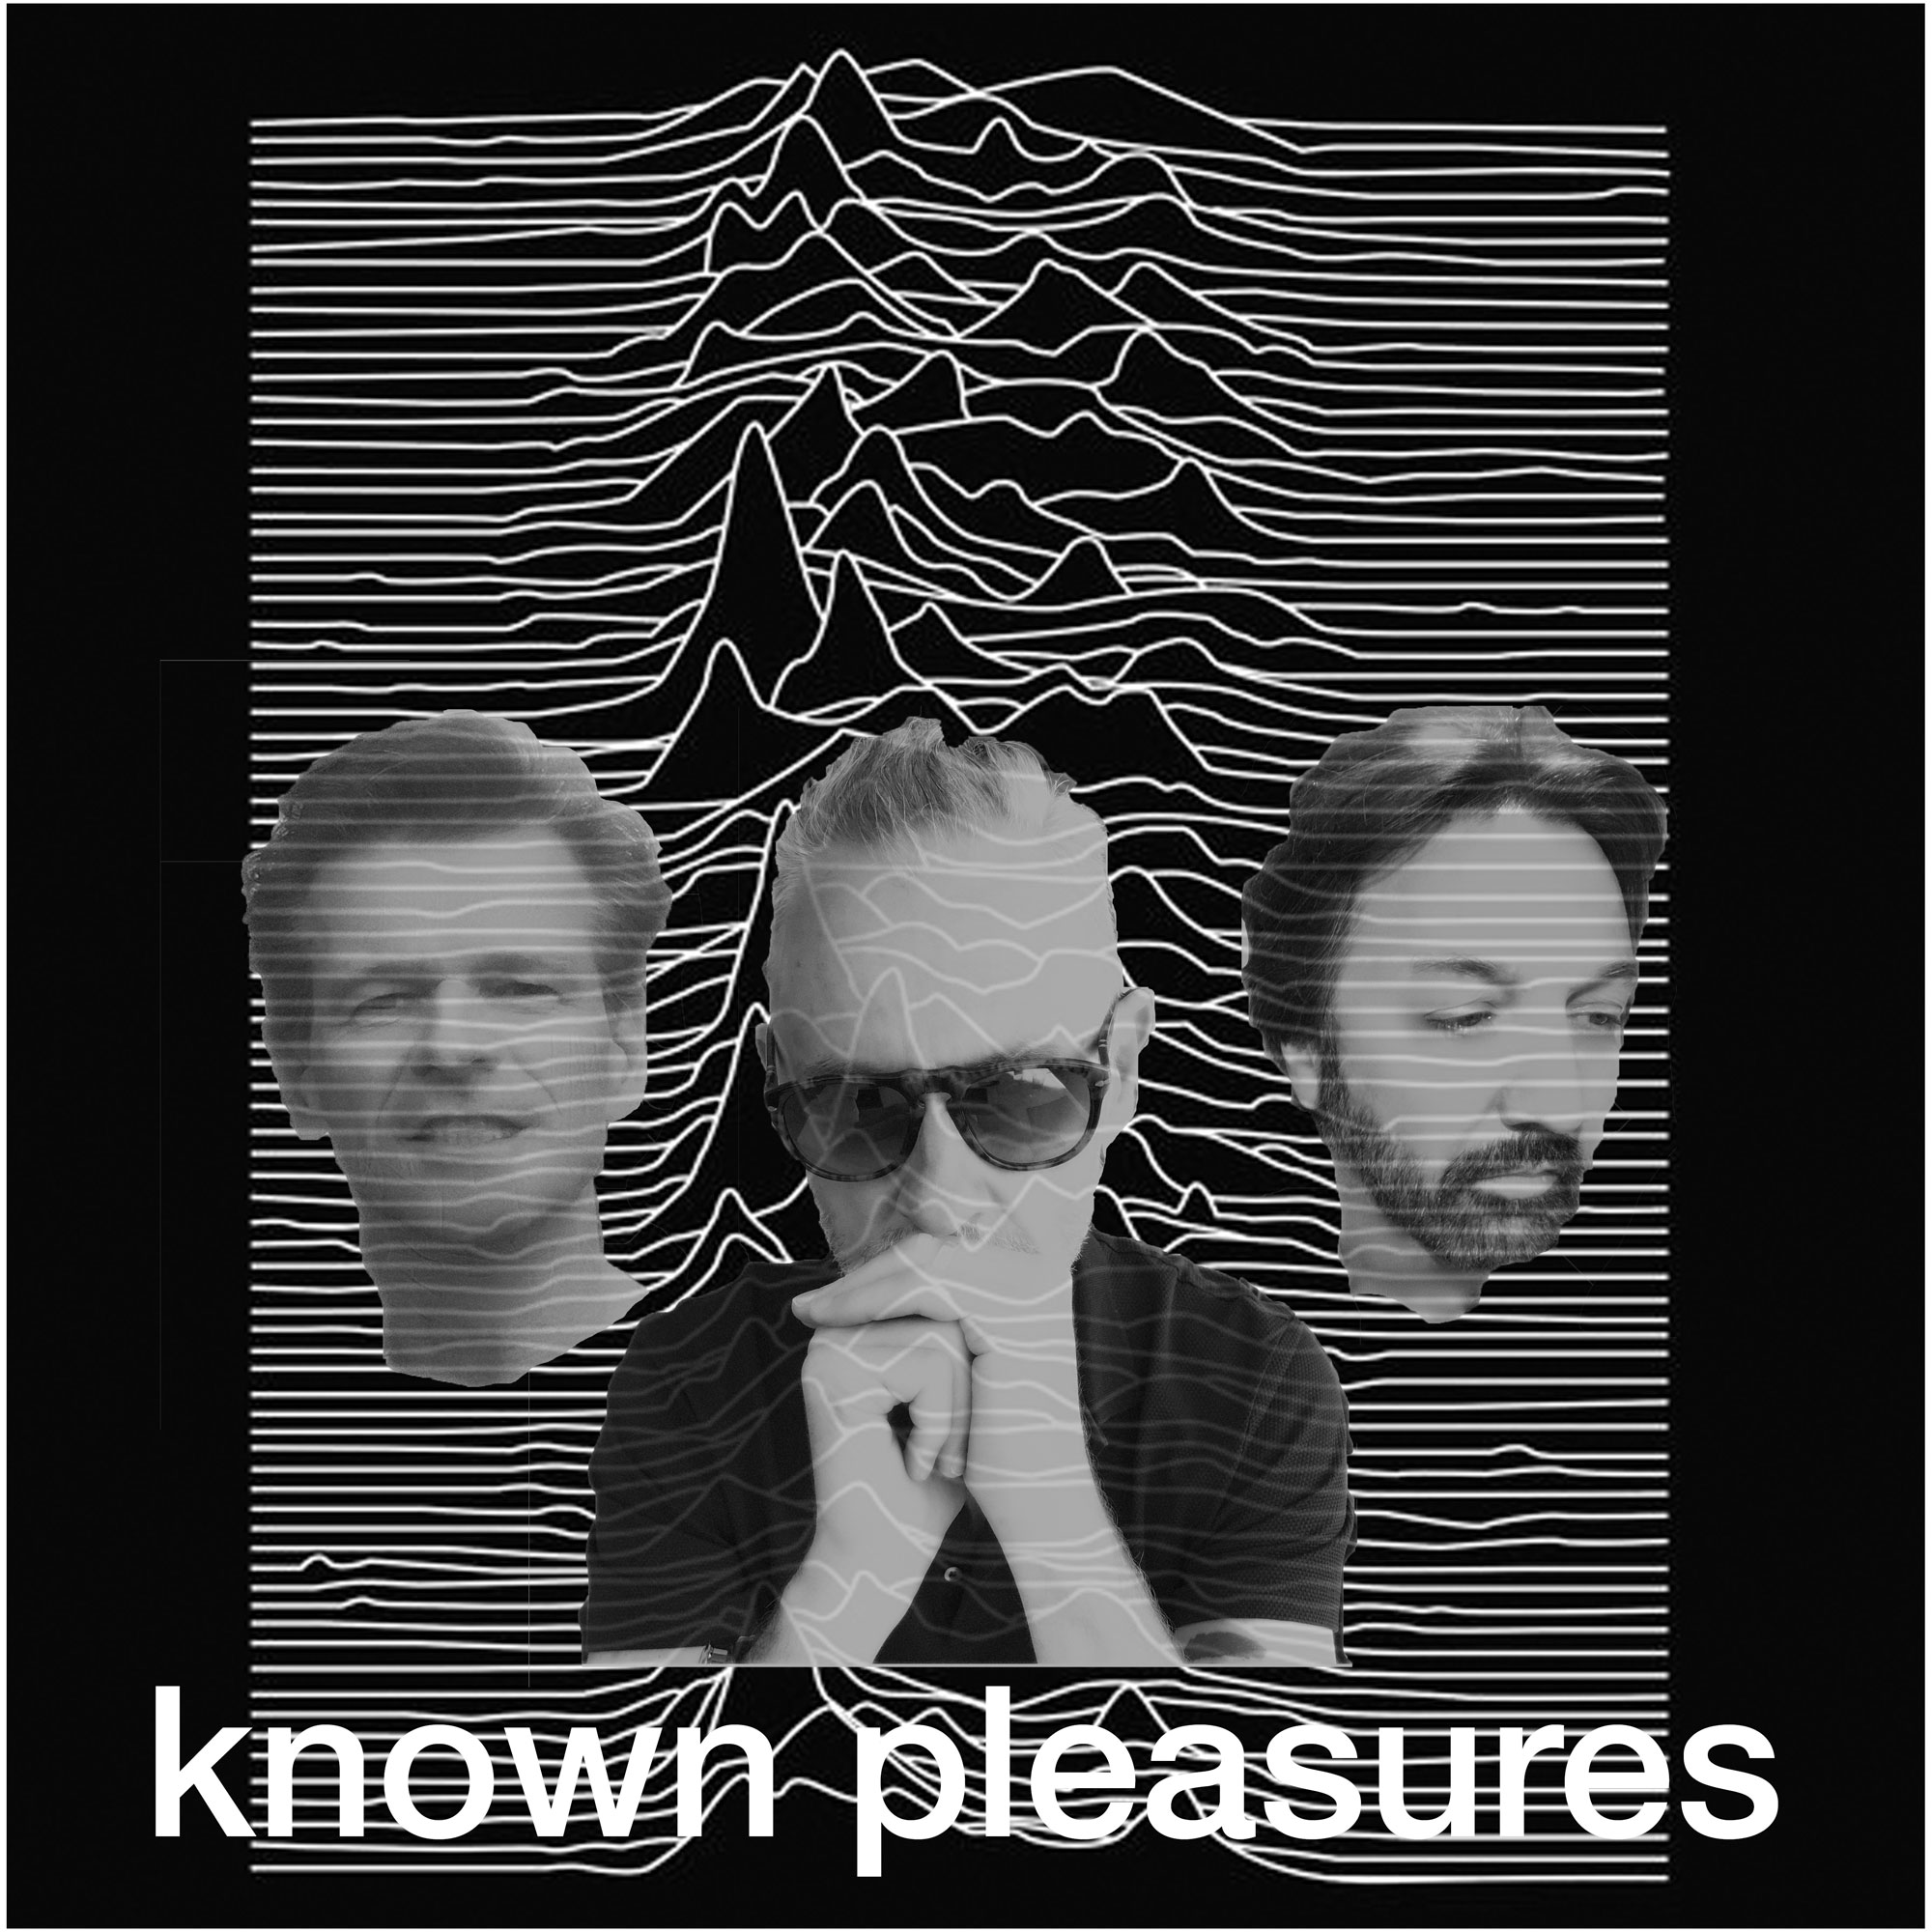 Known Pleasures Ep 11 - Talking Heads